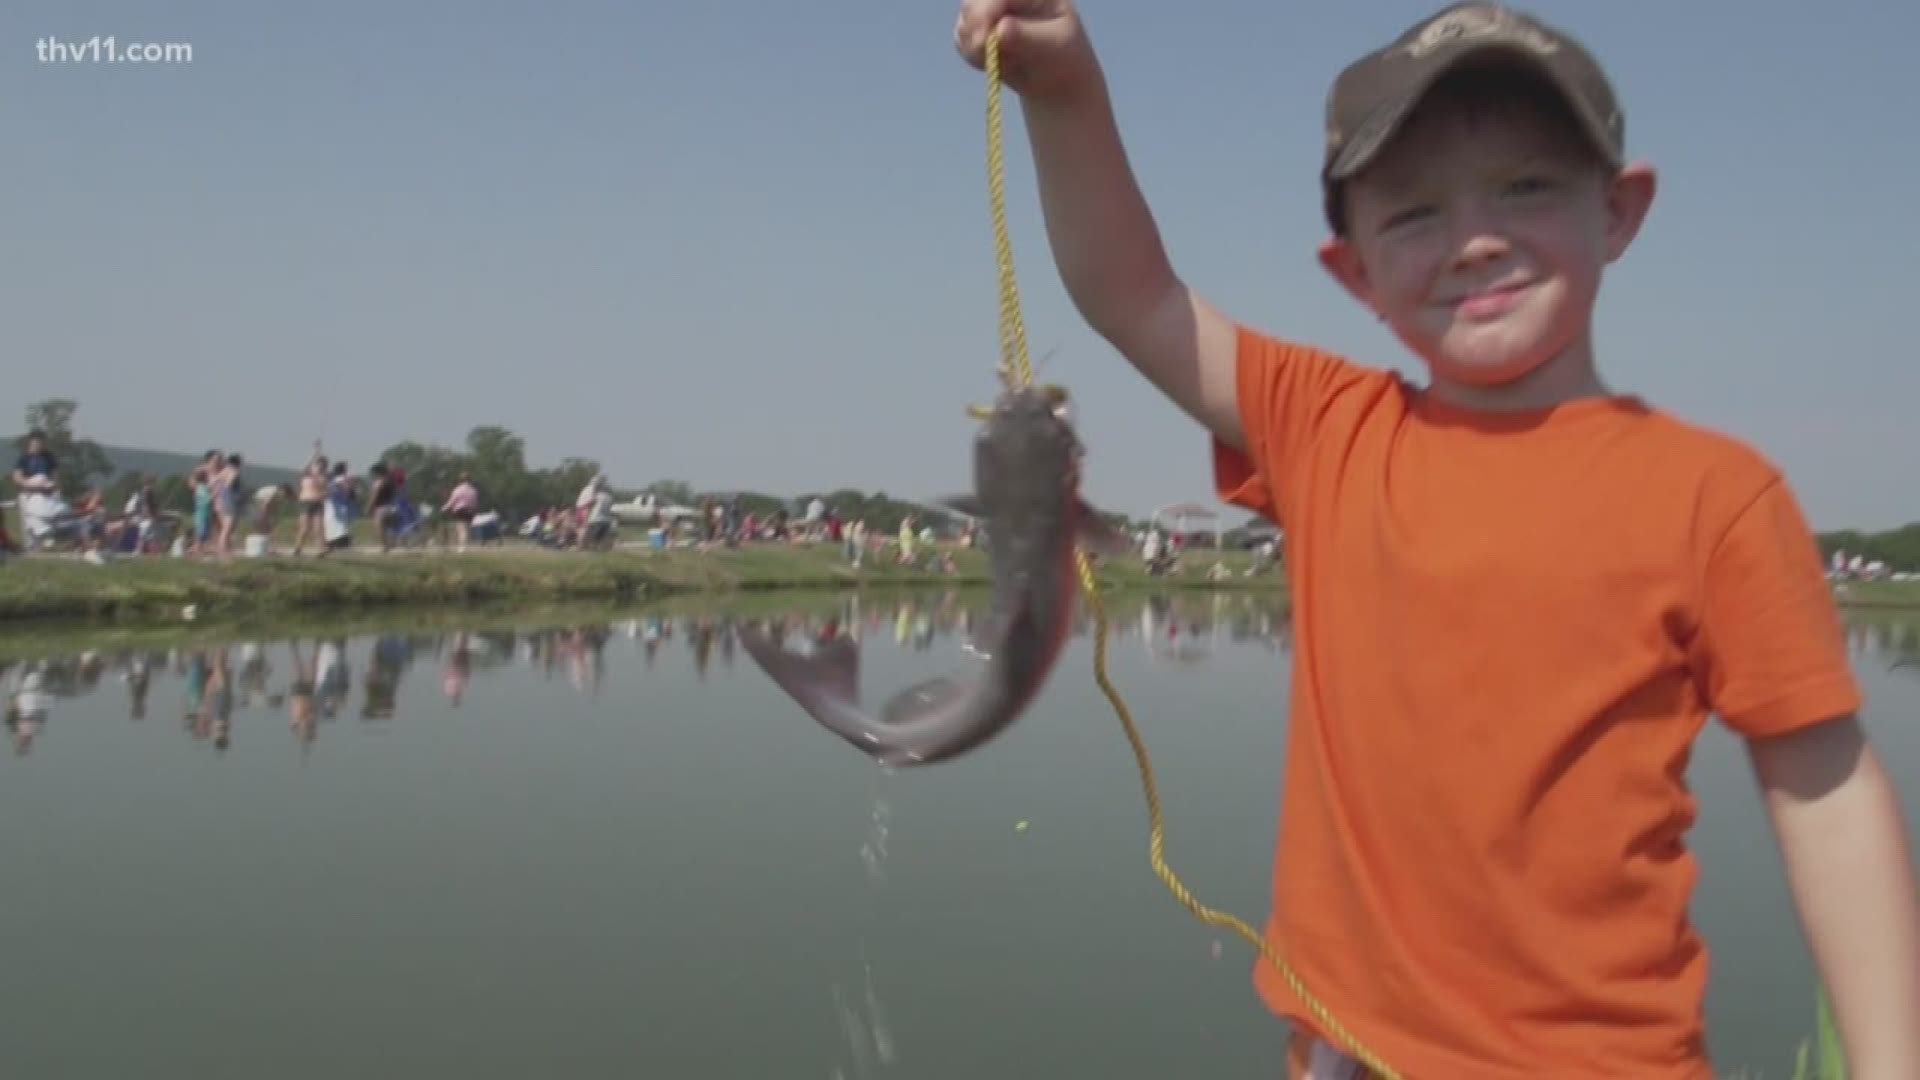 Free fishing weekend in Arkansas